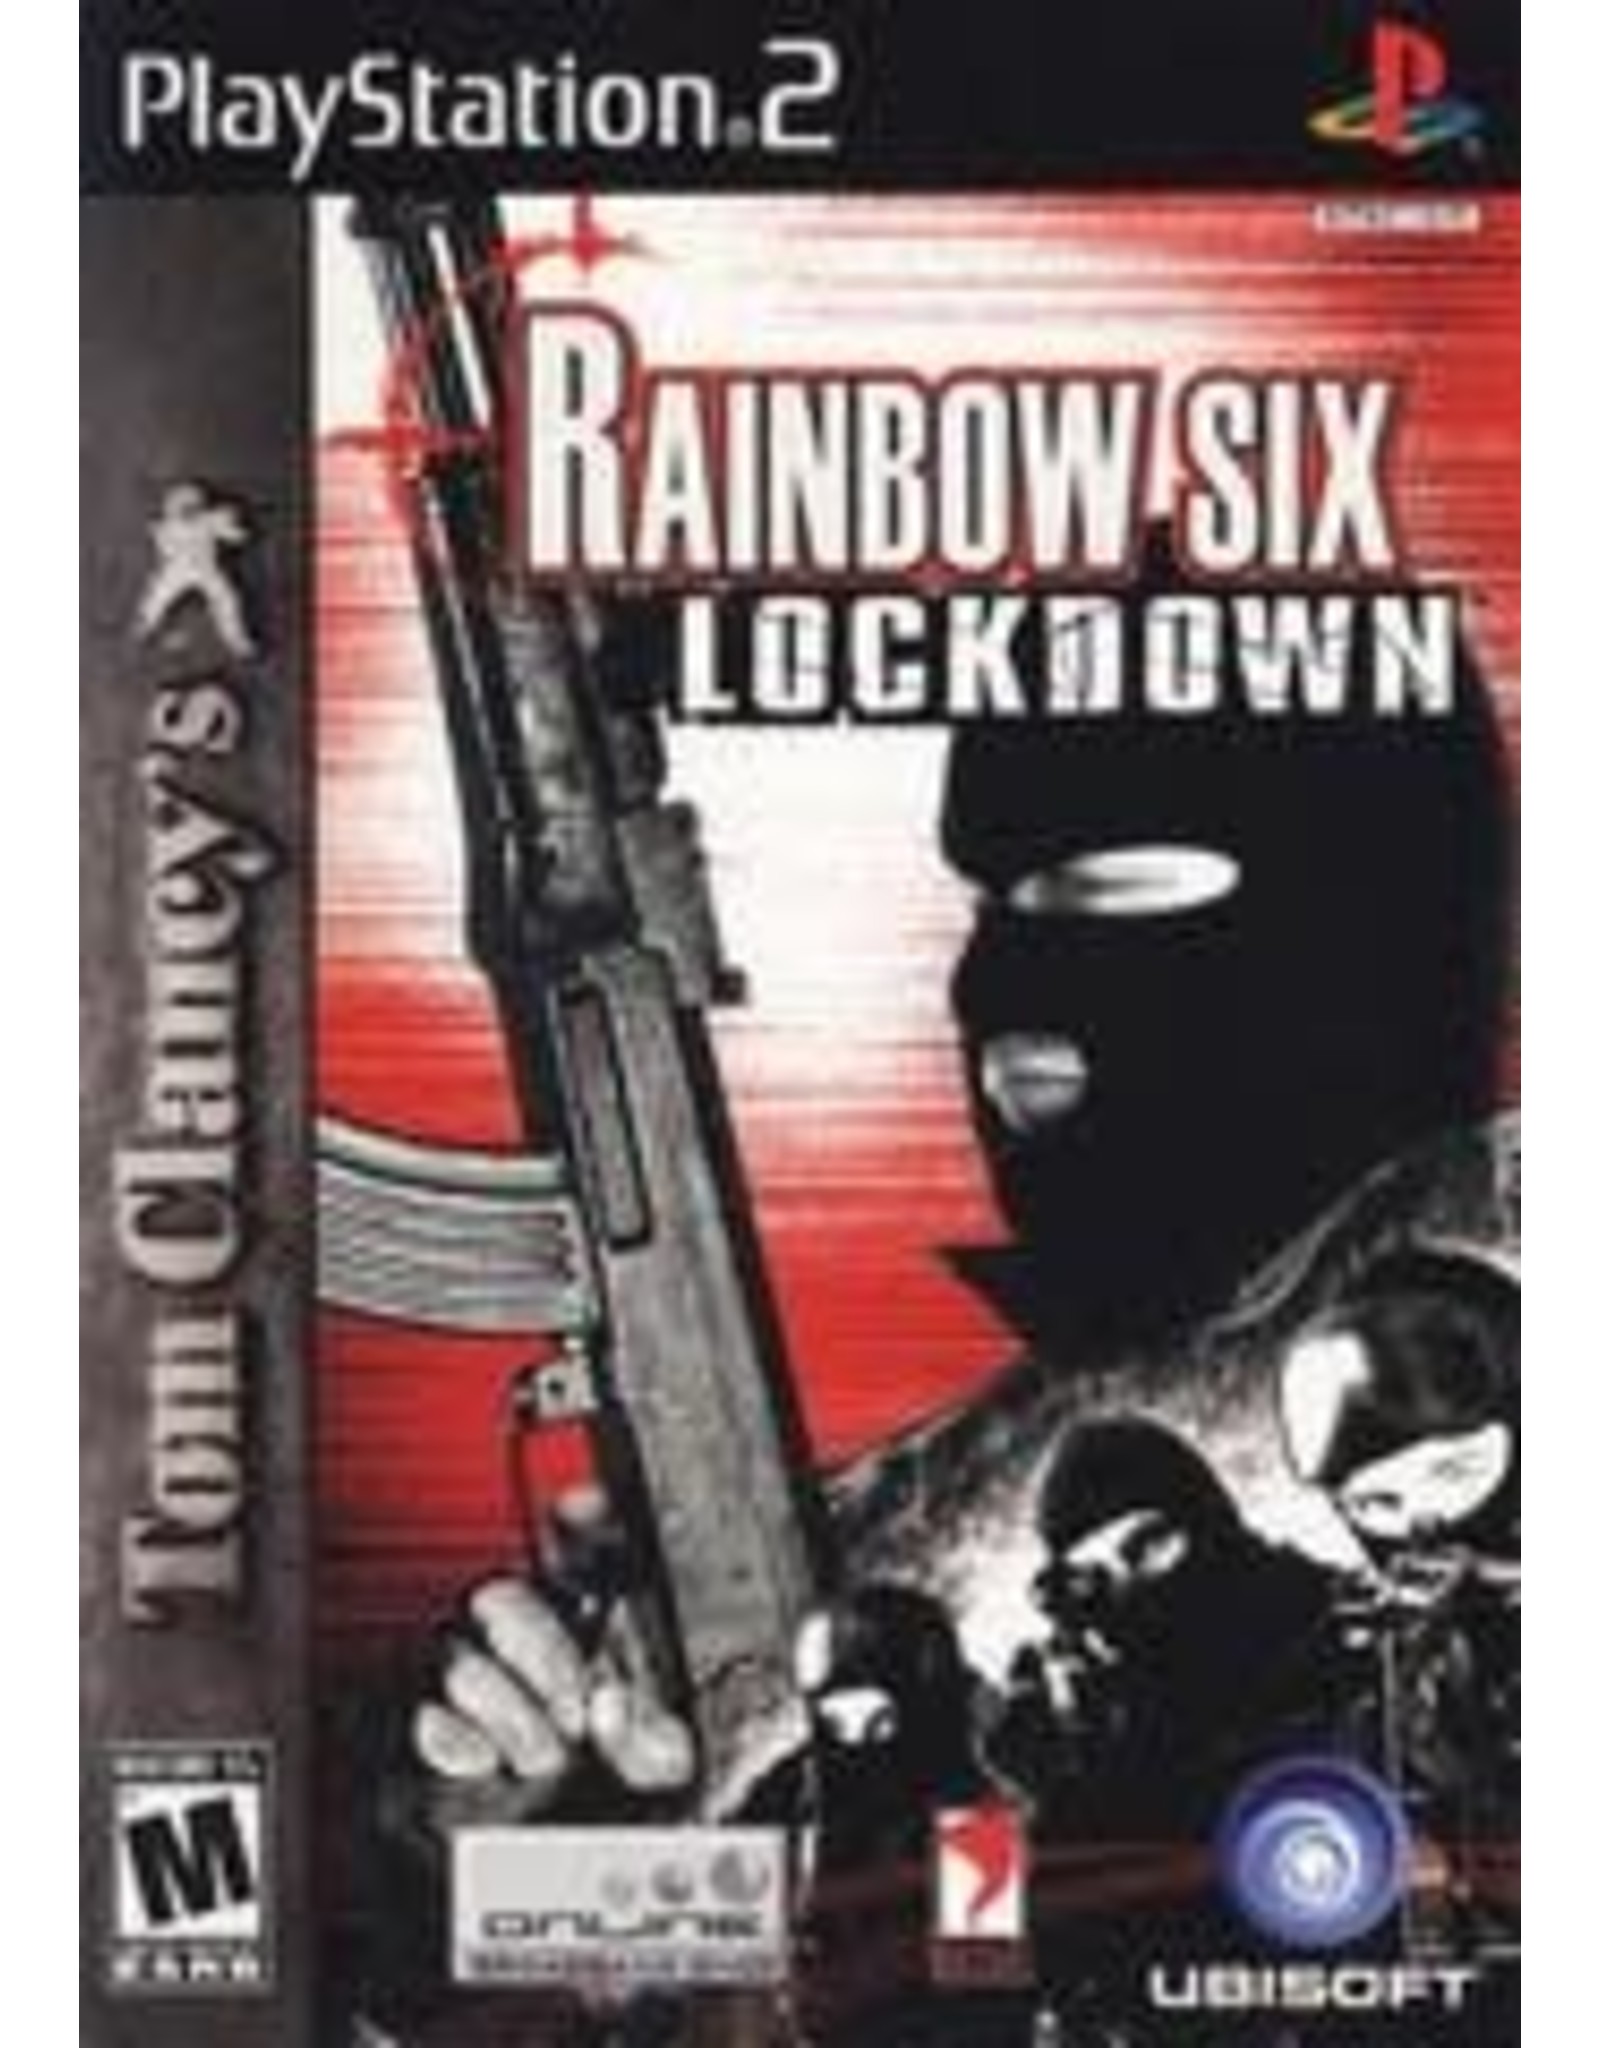 Playstation 2 Rainbow Six Lockdown (CiB)